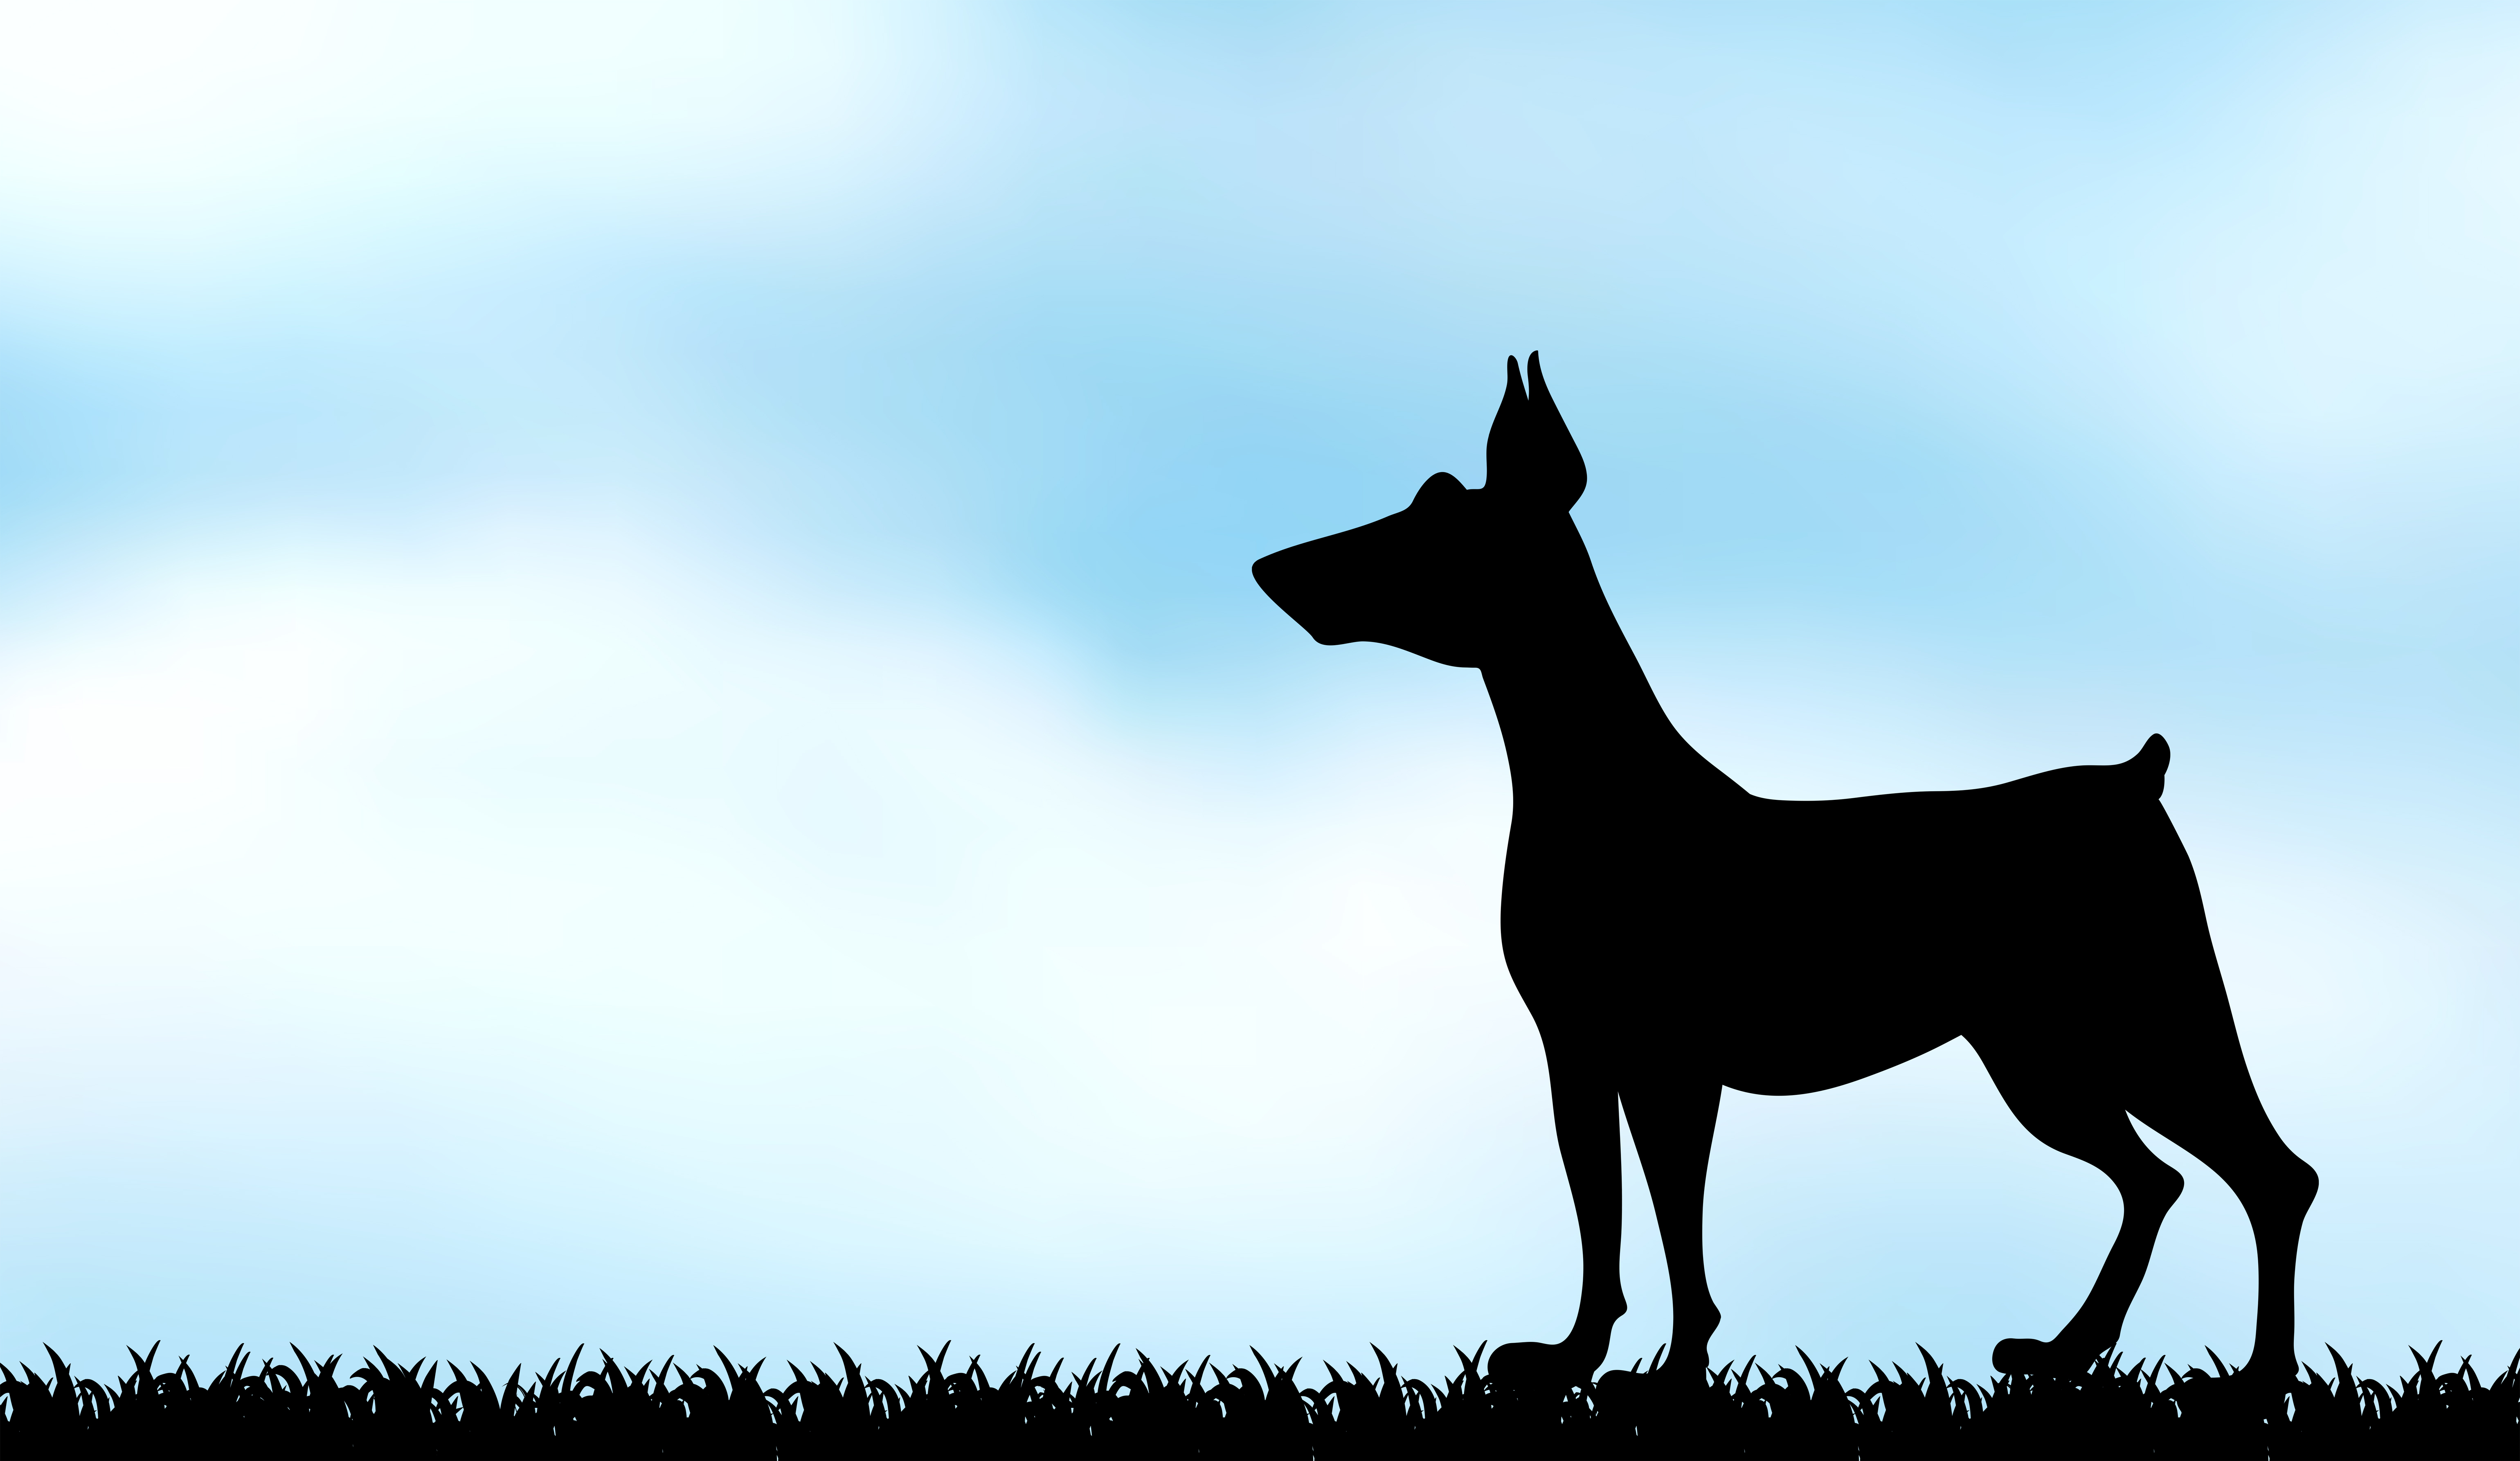 Download Greyhound Silhouette Free Vector Art - (15 Free Downloads)